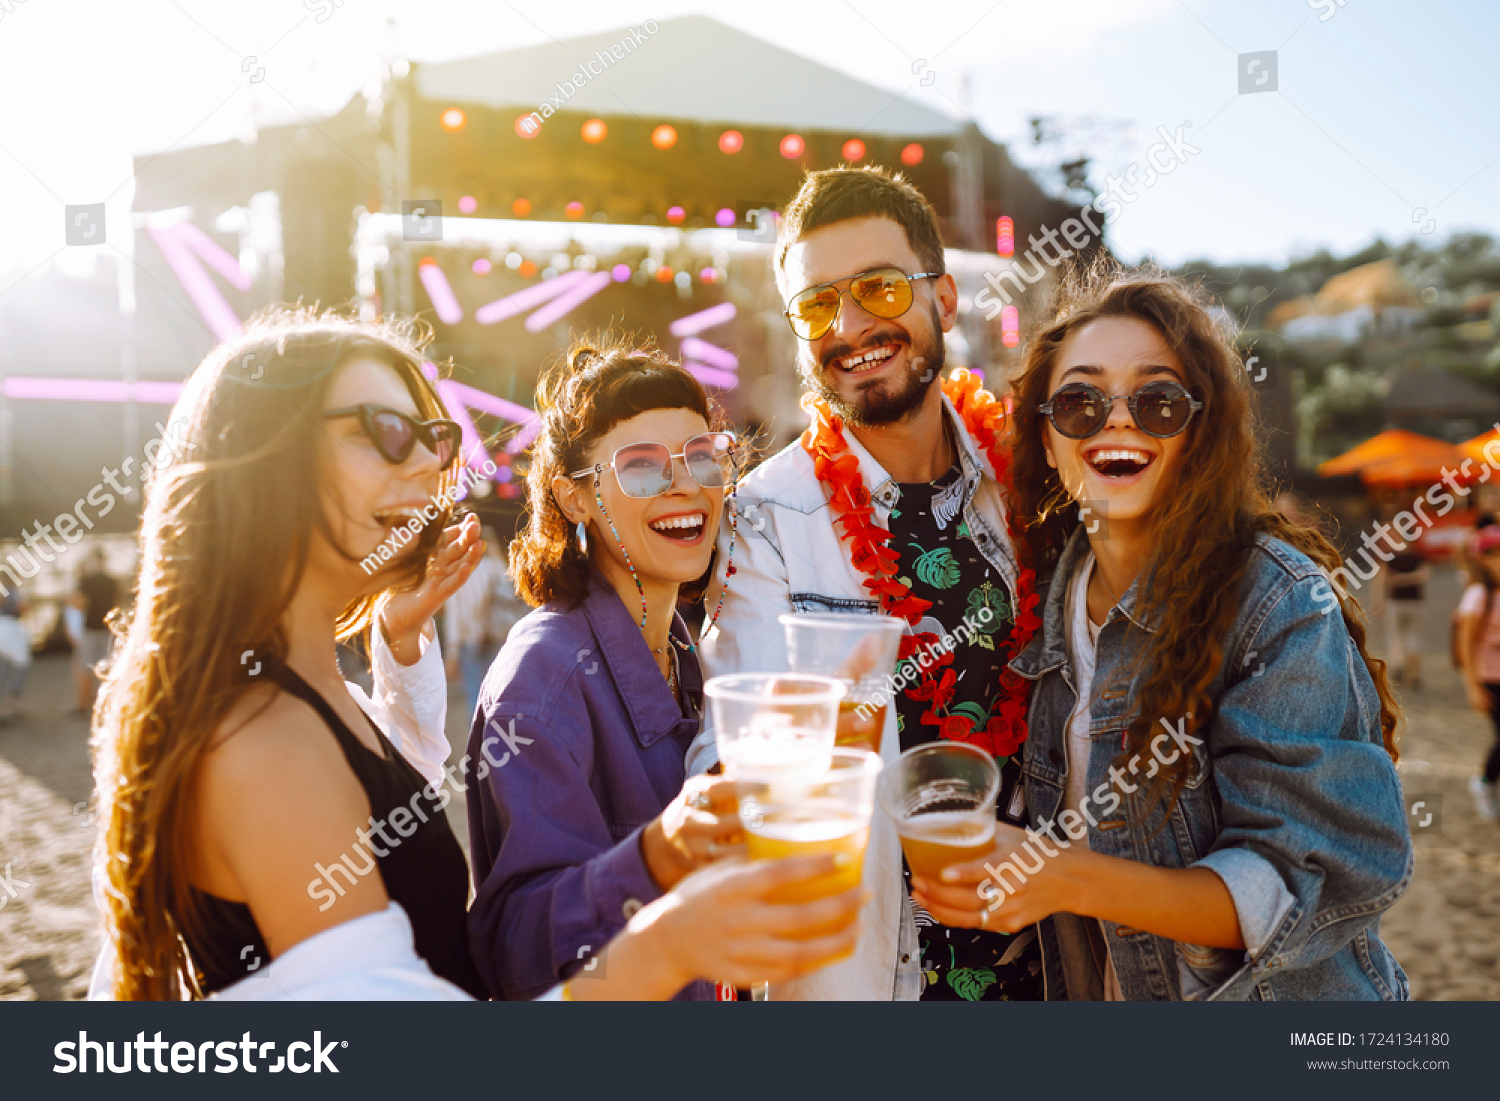 144,852 Beach festival Images, Stock Photos & Vectors | Shutterstock